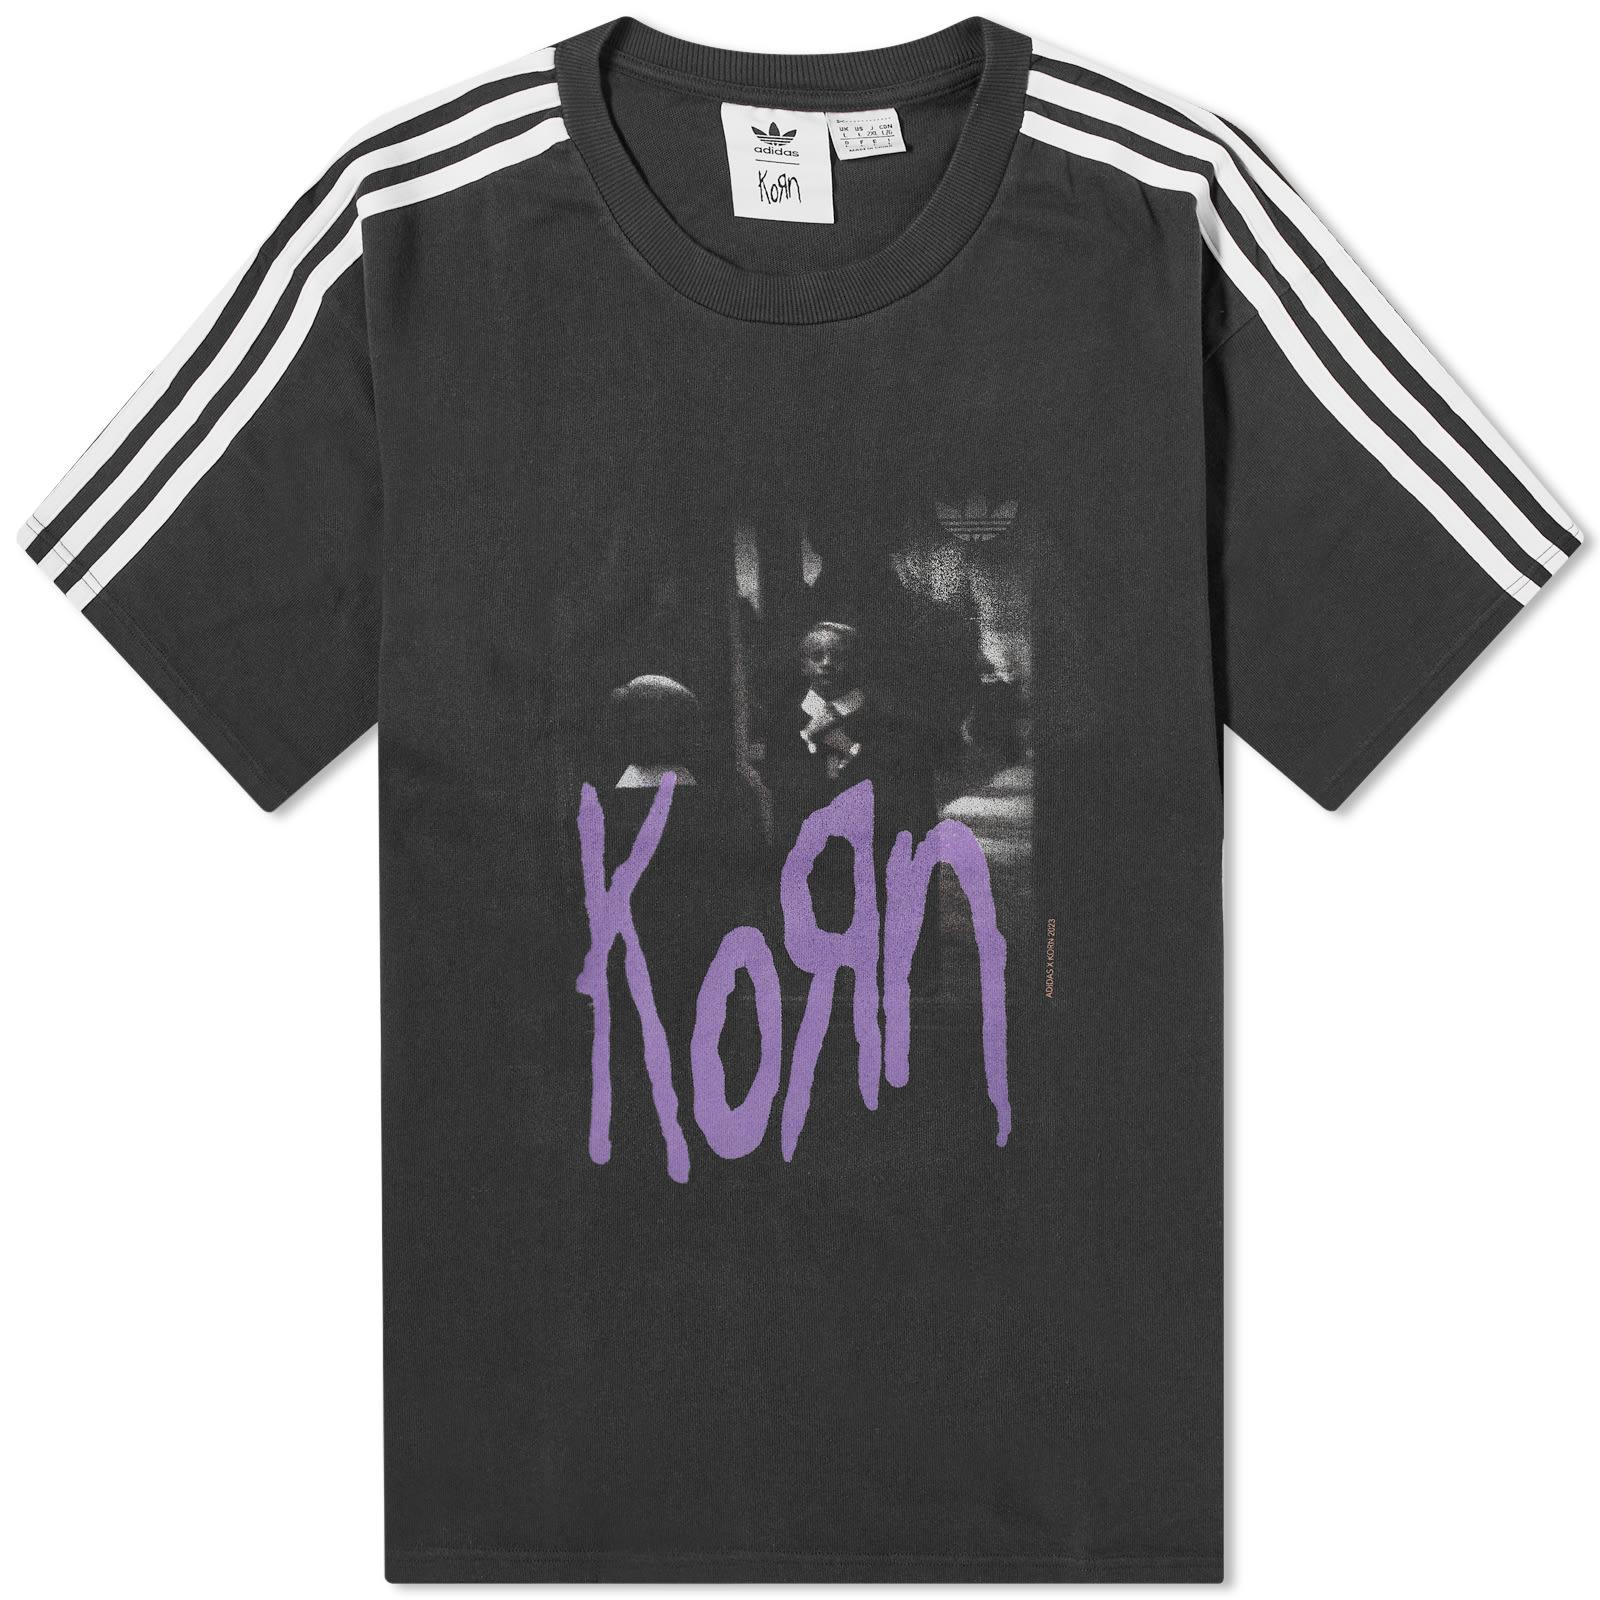 adidas Korn Track Top - Black, Men's Lifestyle